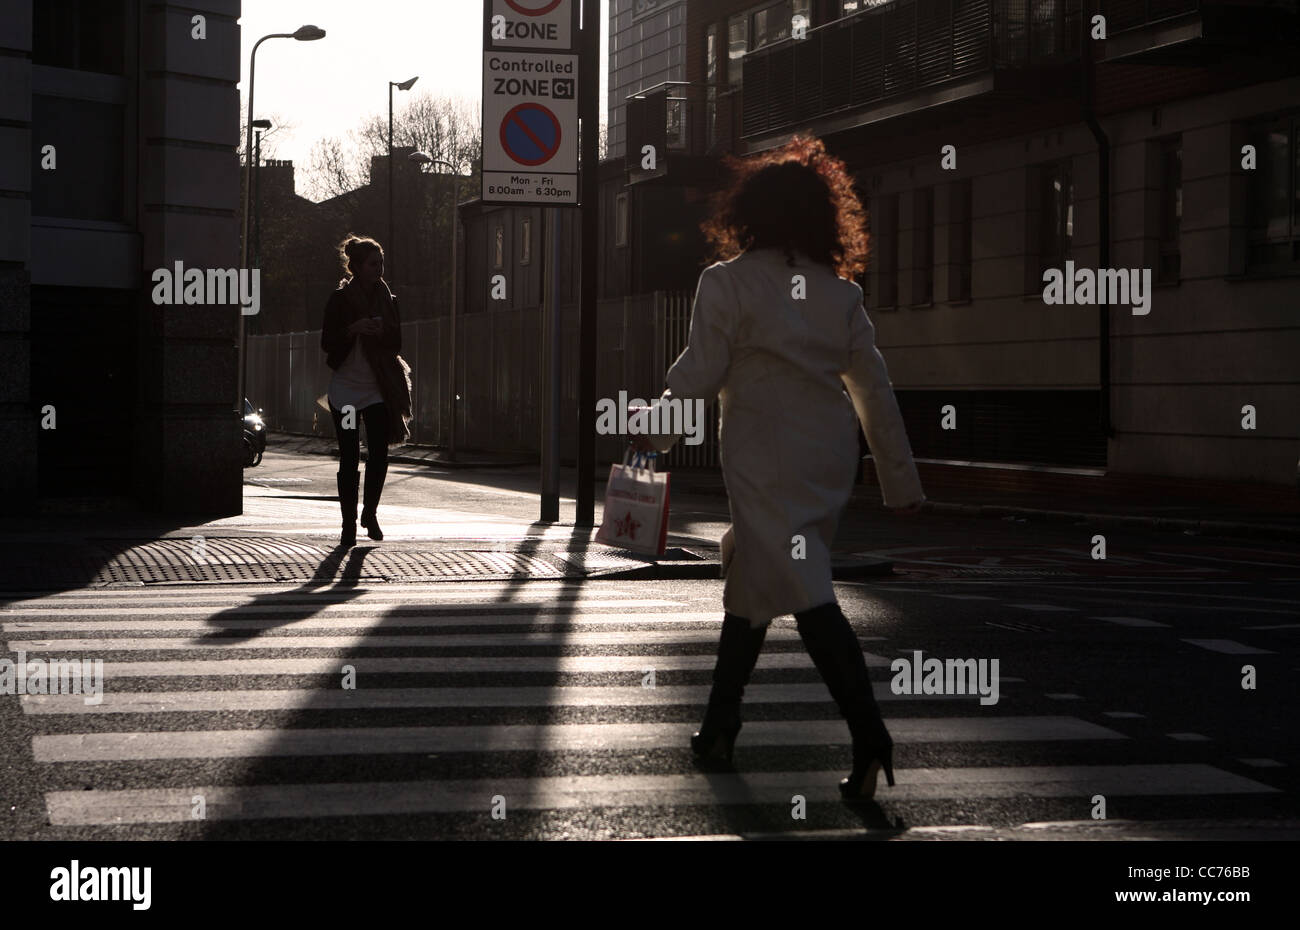 two females crossing a zebra crossing in London Stock Photo